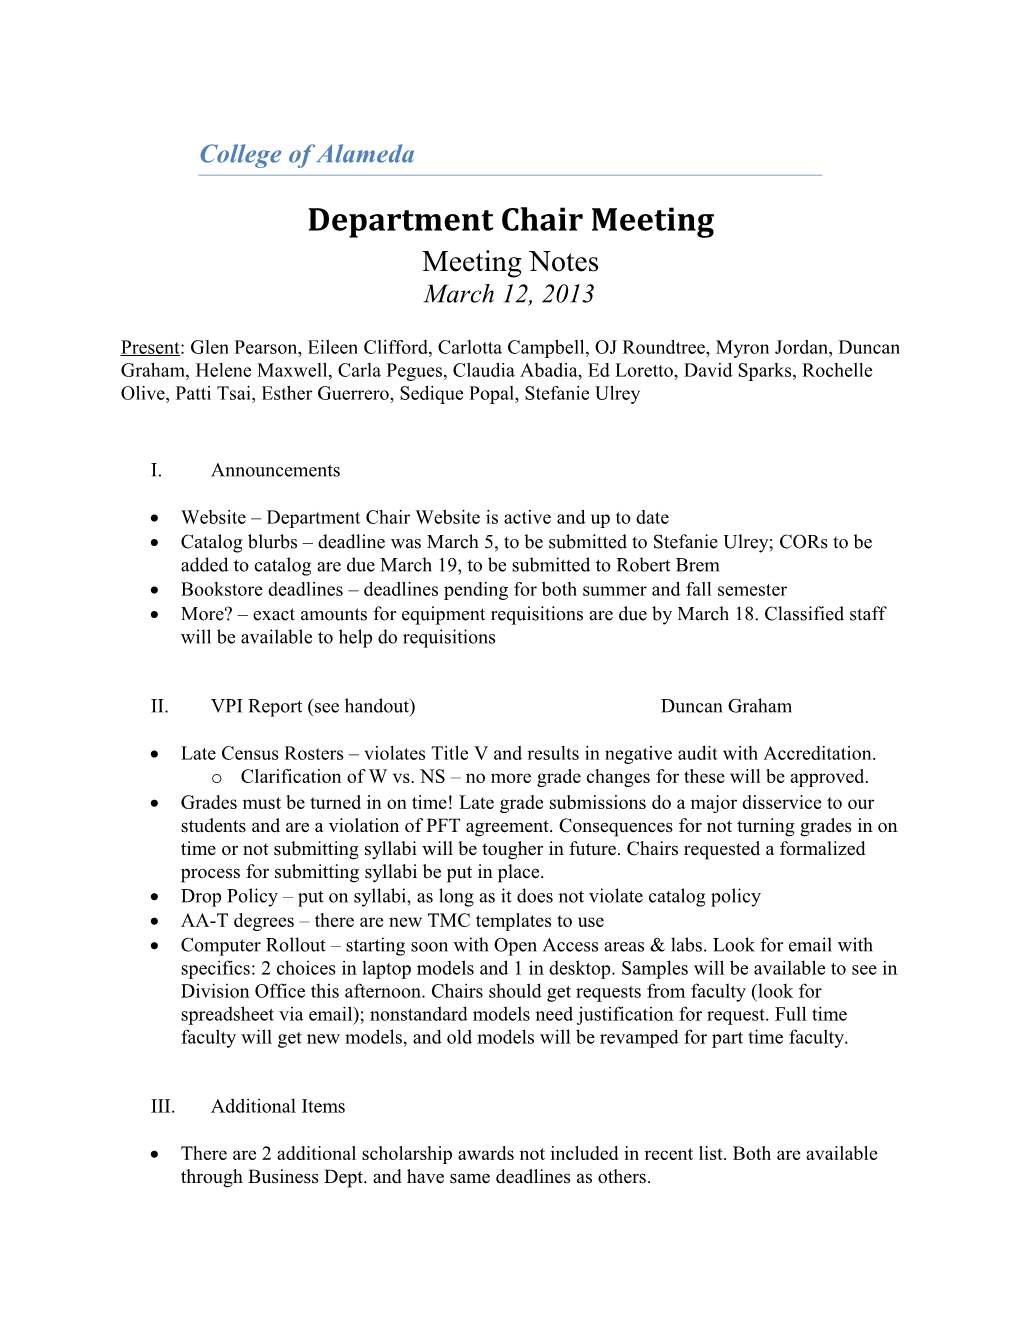 Department Chair Meeting